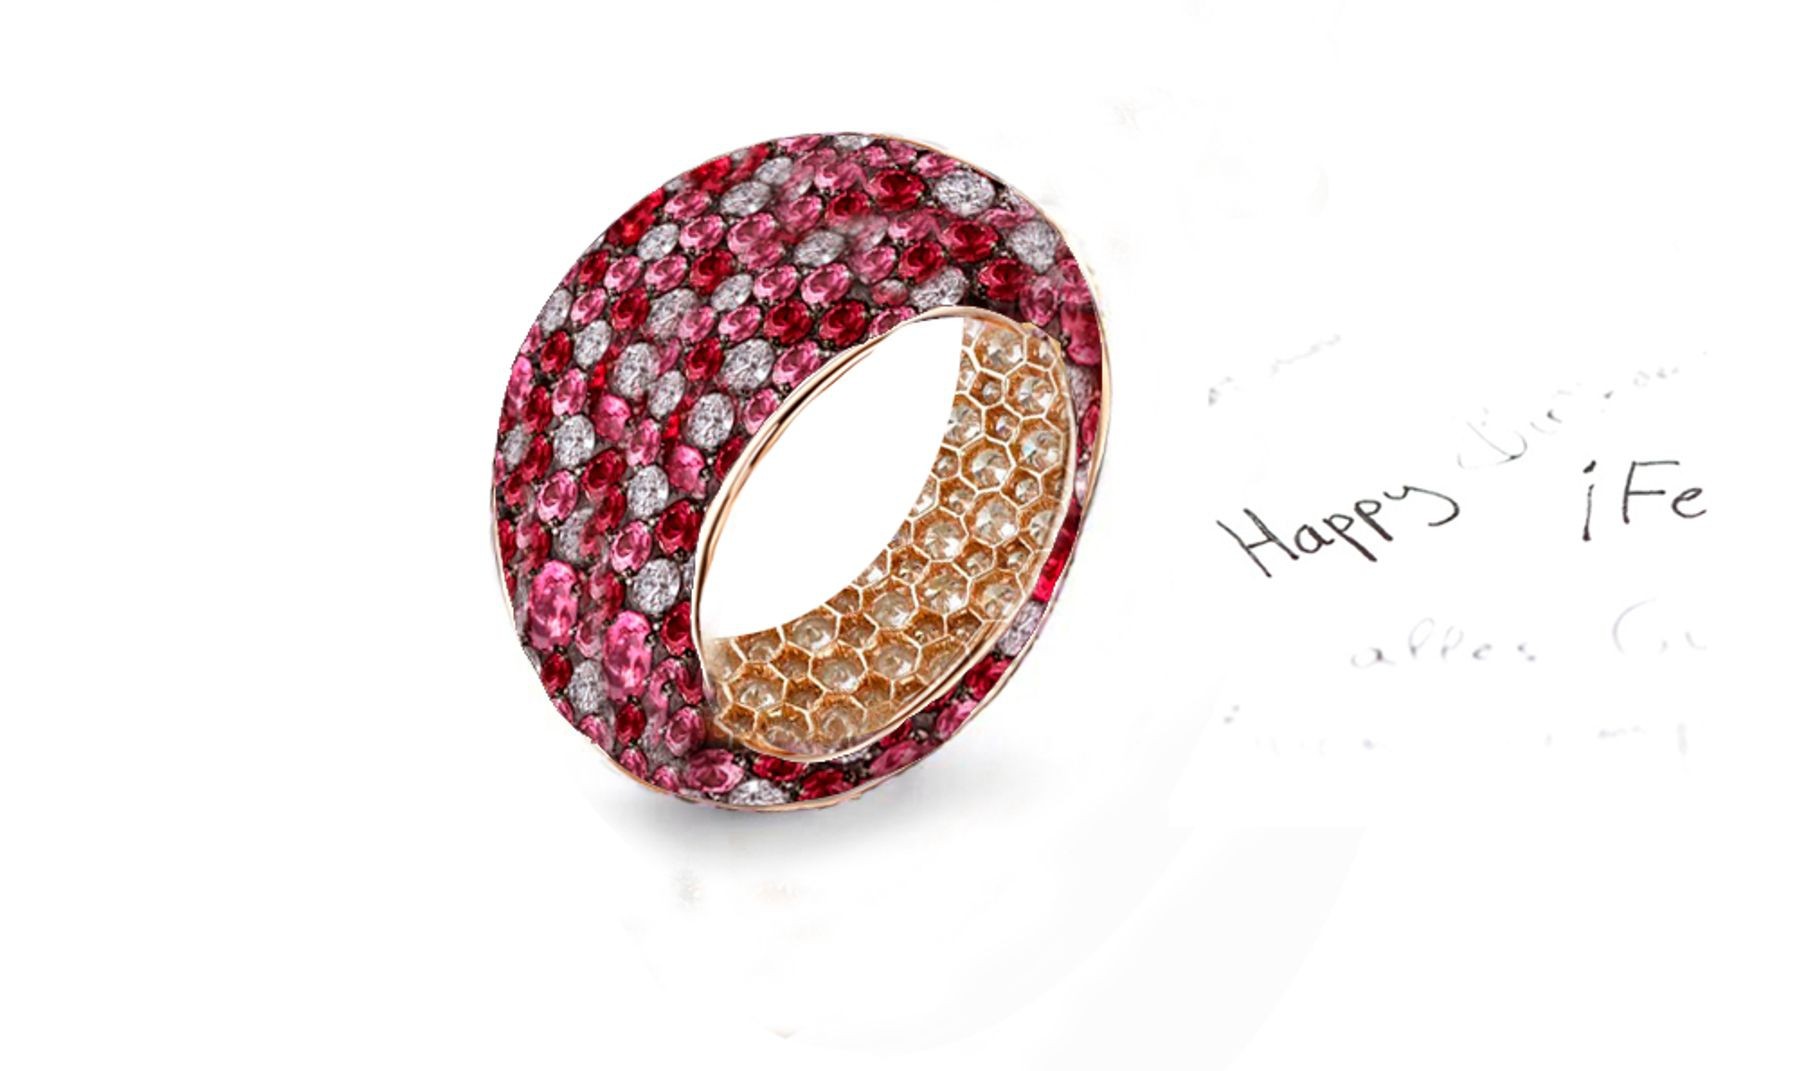 High Quality Multi-Colored Diamonds & Precious Stones Eternity Band Rings